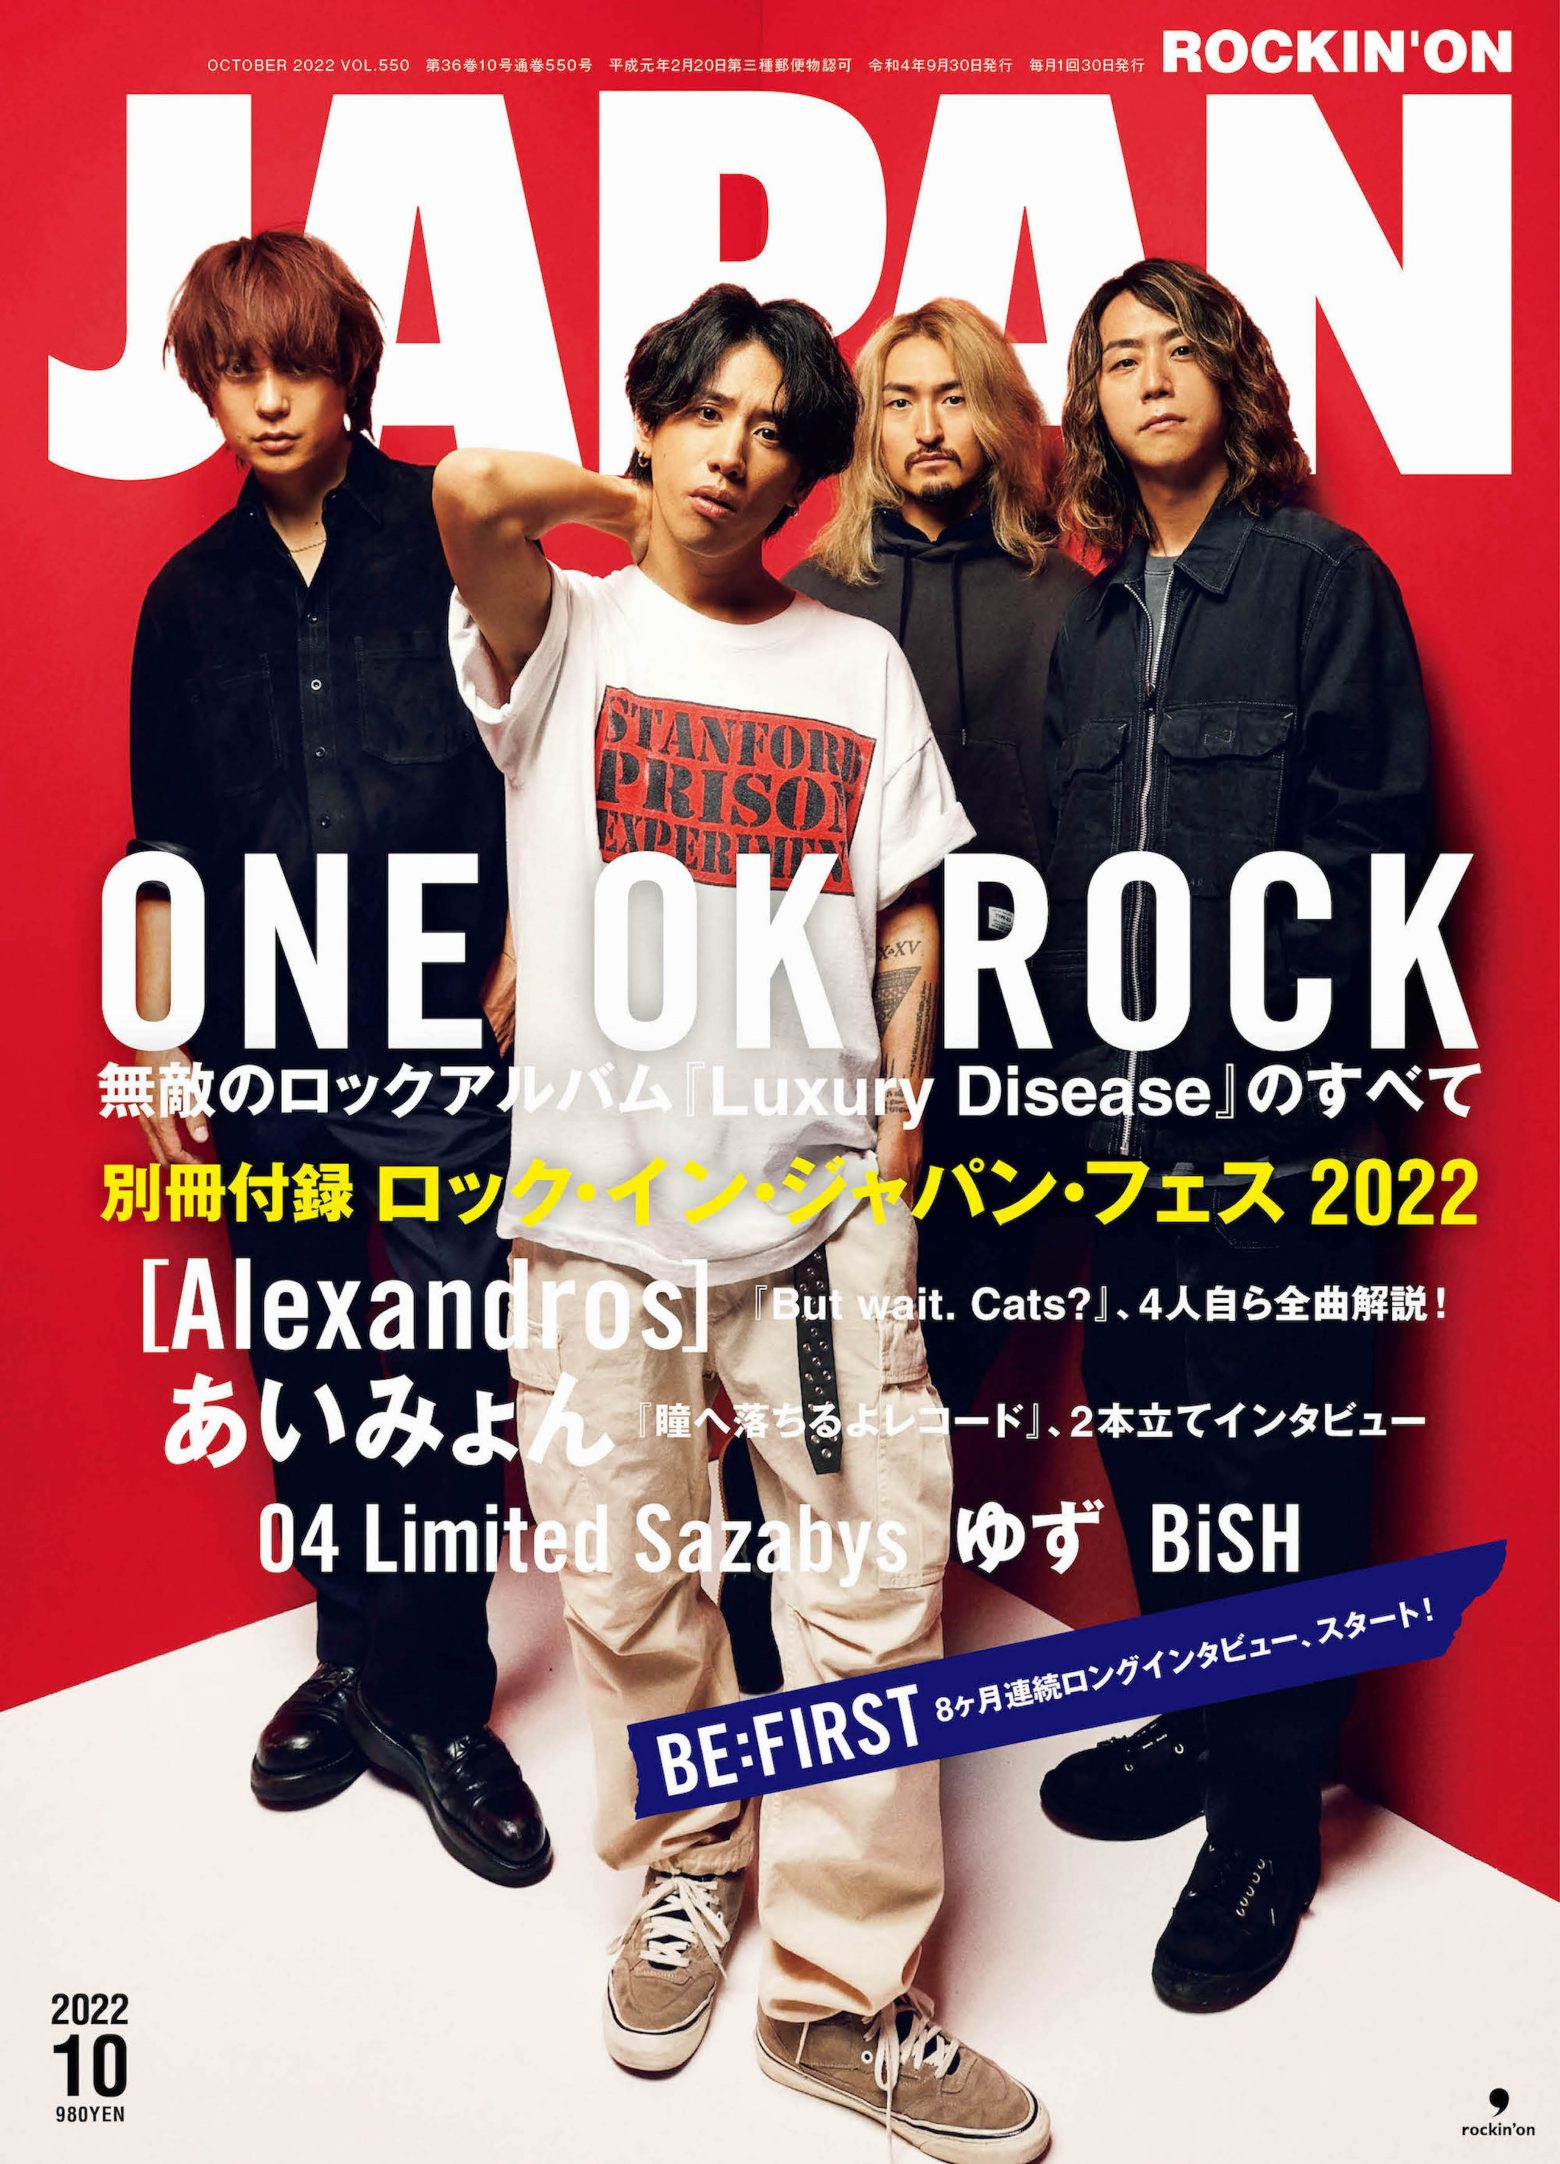 ONE OK ROCK ワンオクロック 雑誌 ポスター レア物 - タレントグッズ